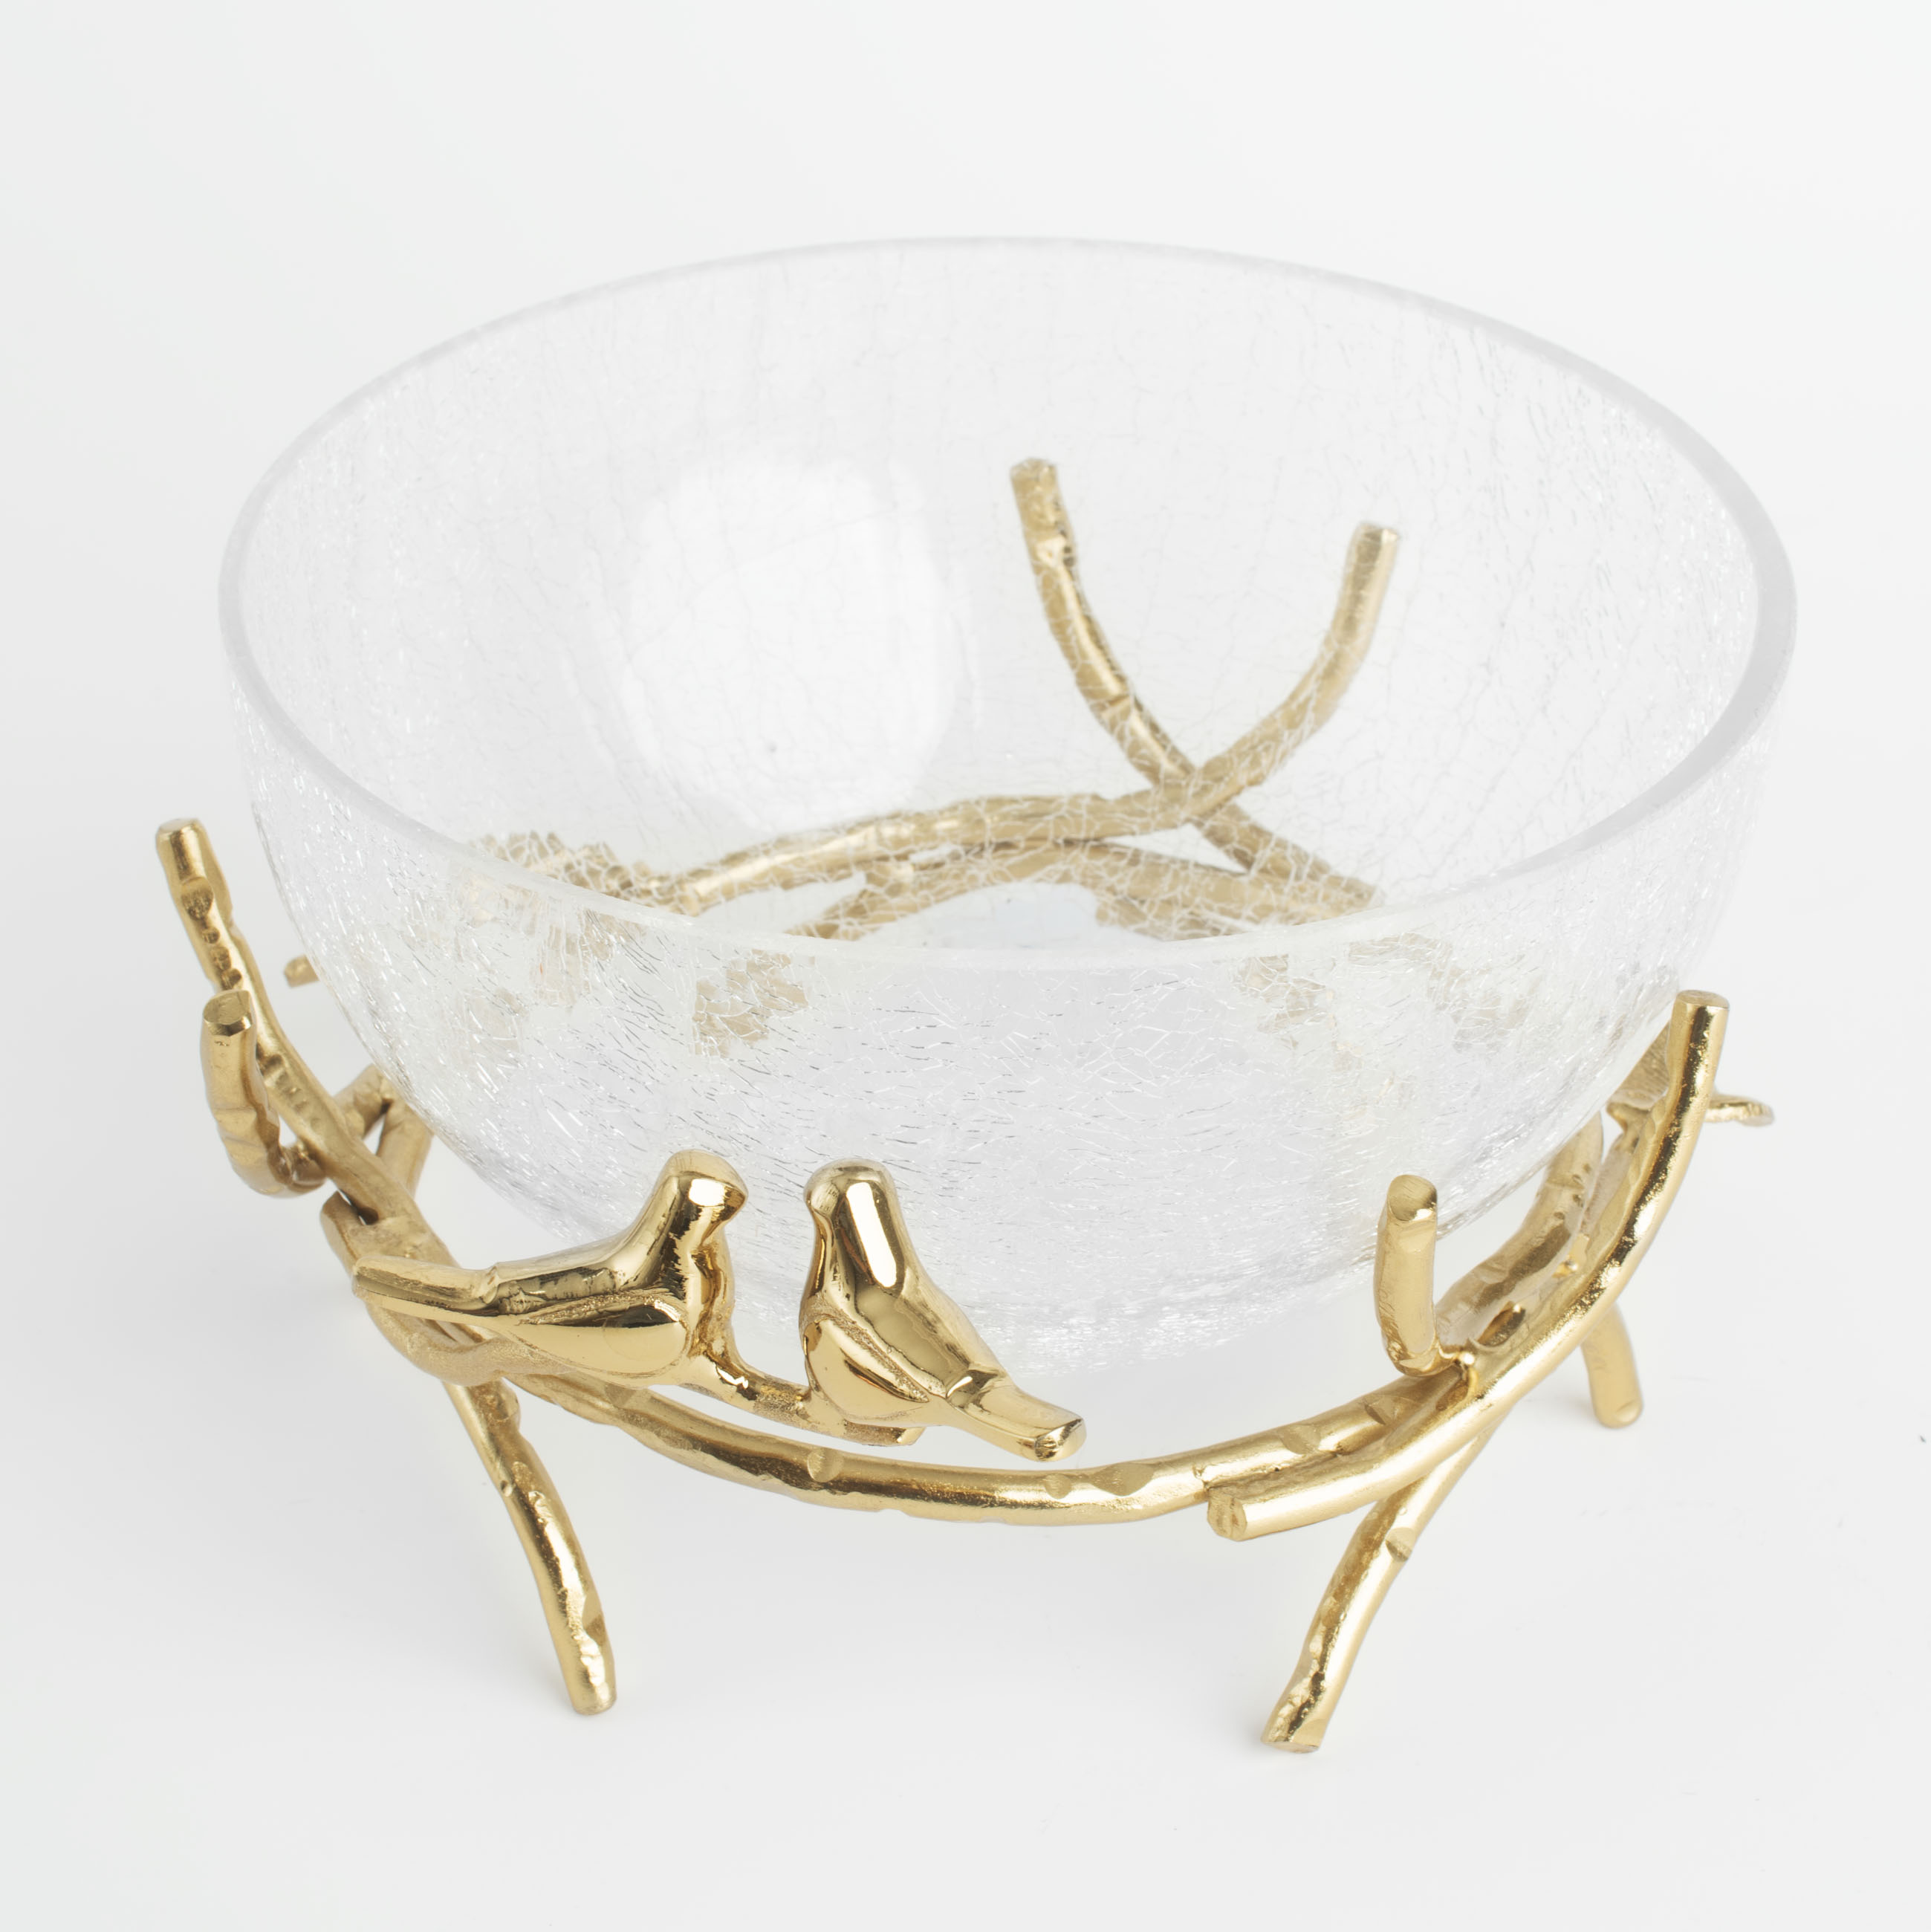 Deep dish, 21x9 cm, on a stand, glass / metal, golden, Birds, Fantastic gold изображение № 4